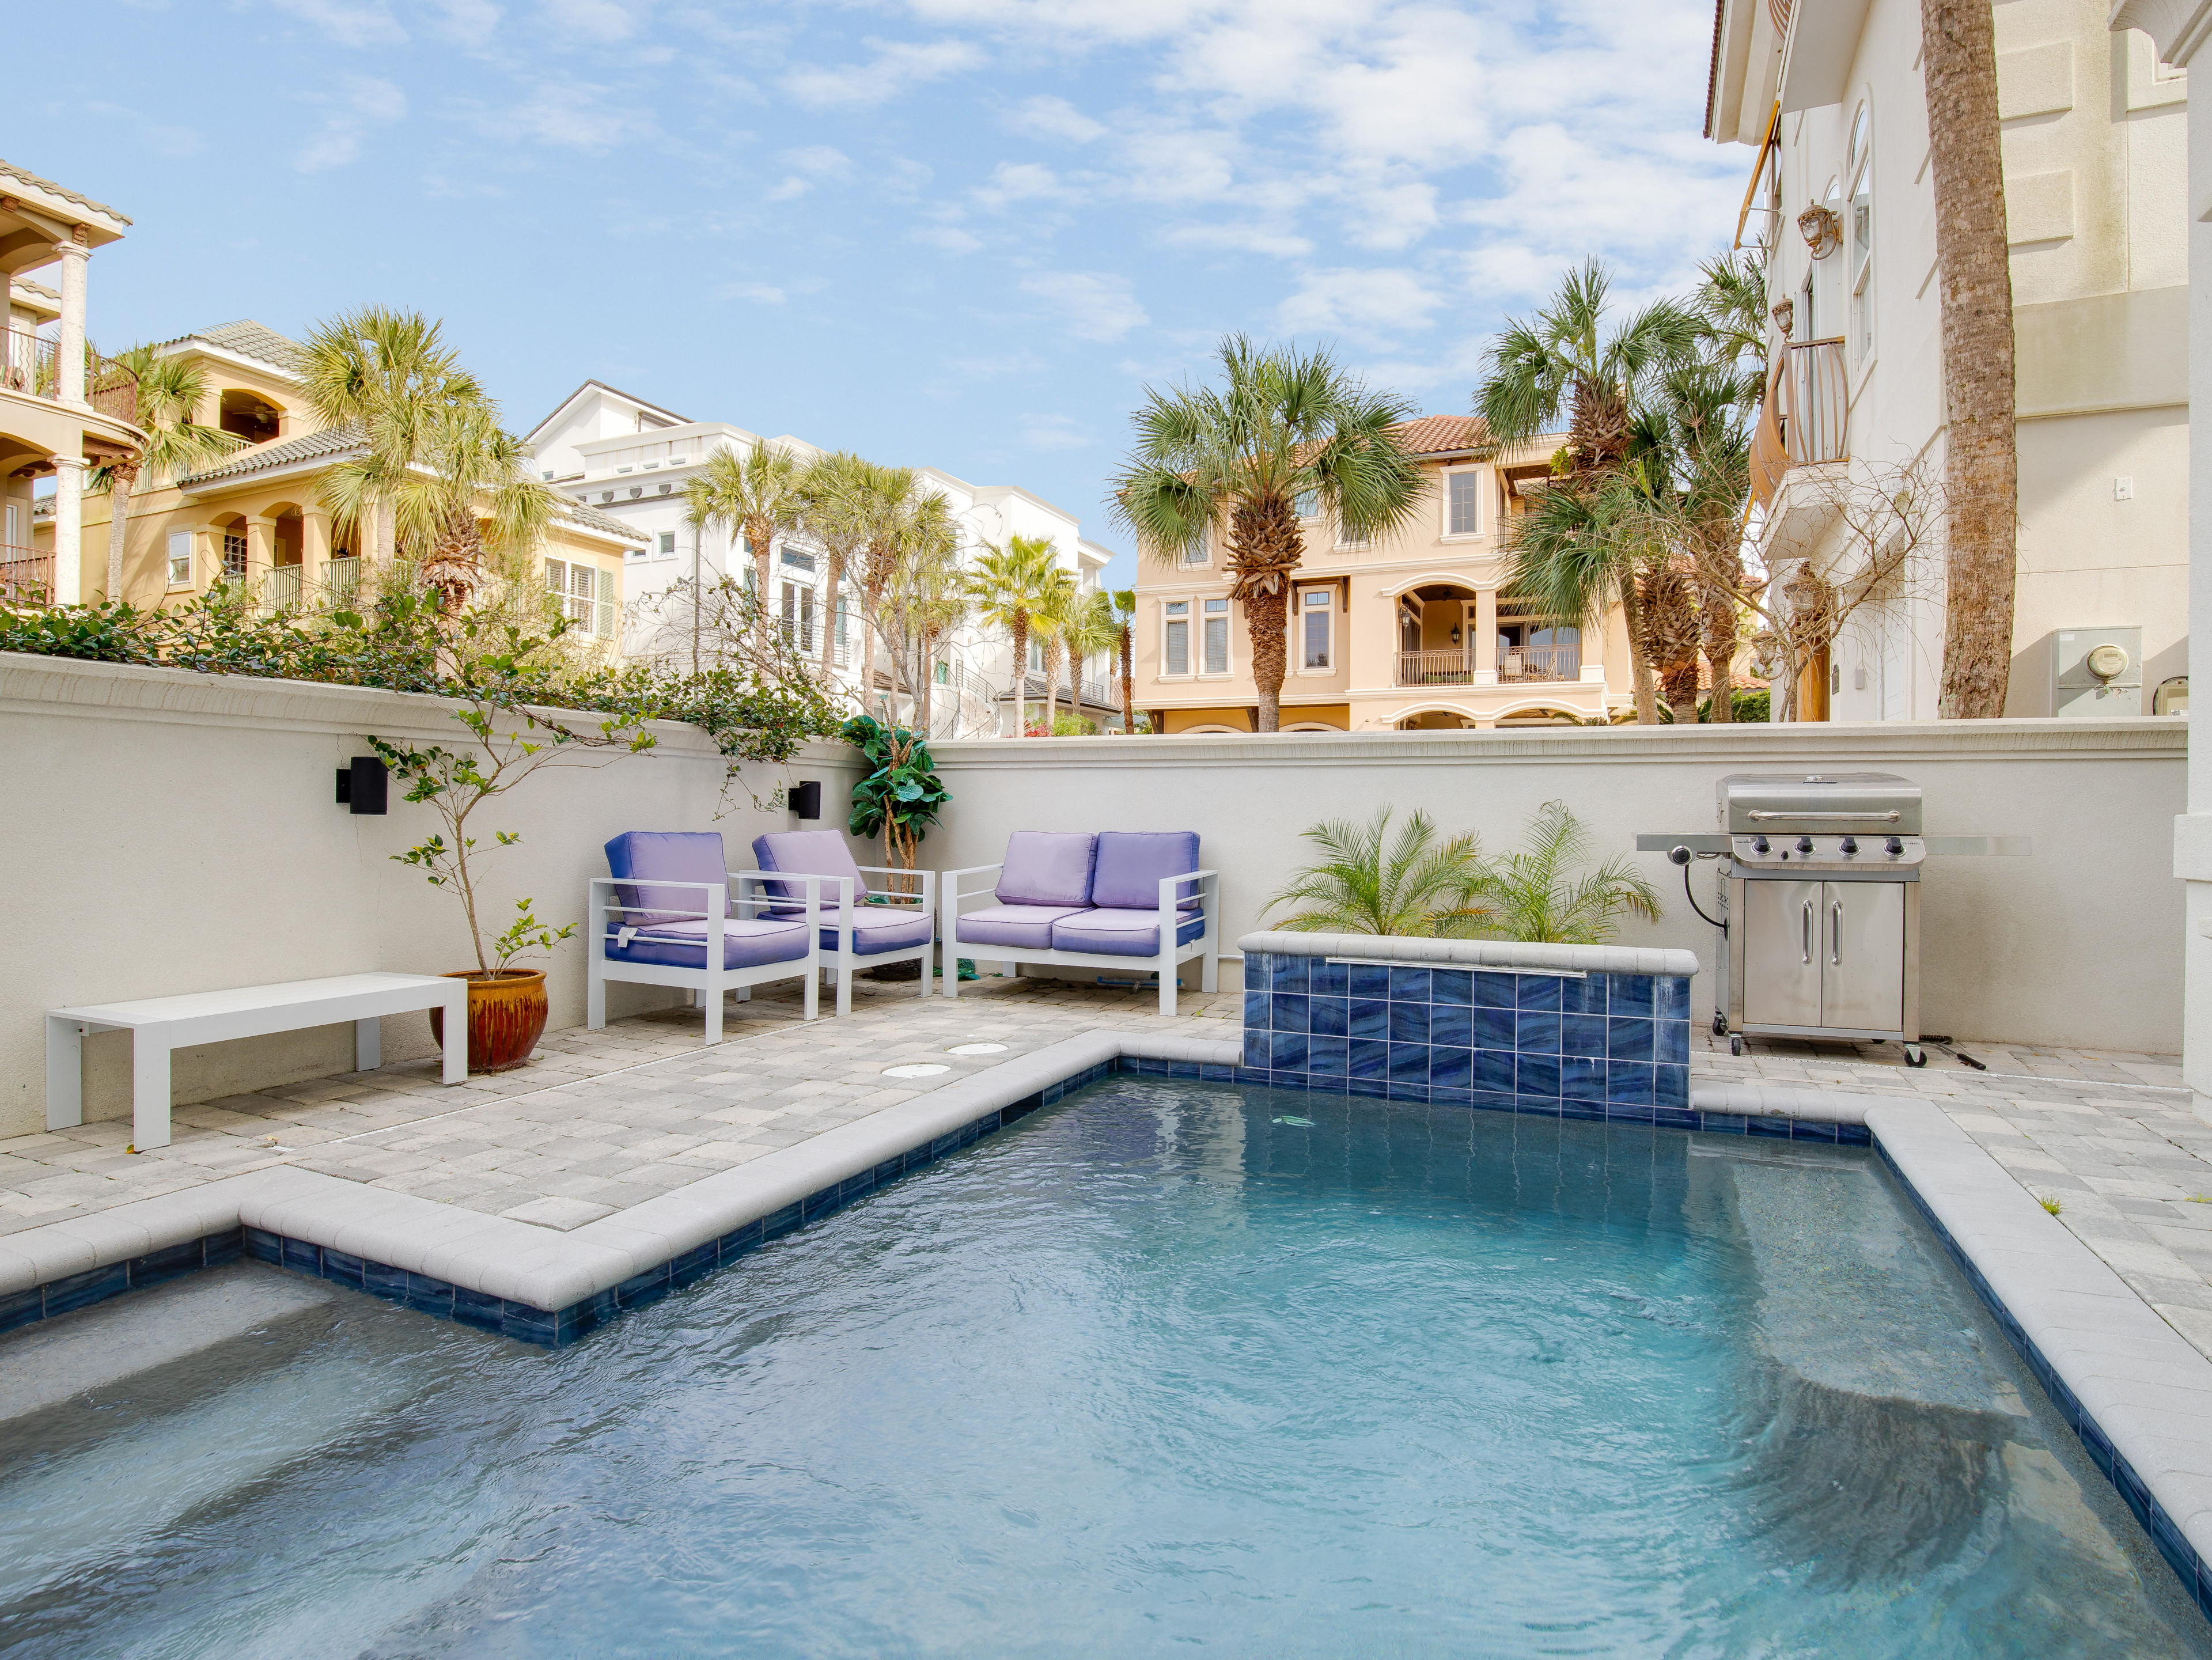 Destin 289 Destin vacation rentals with private pools